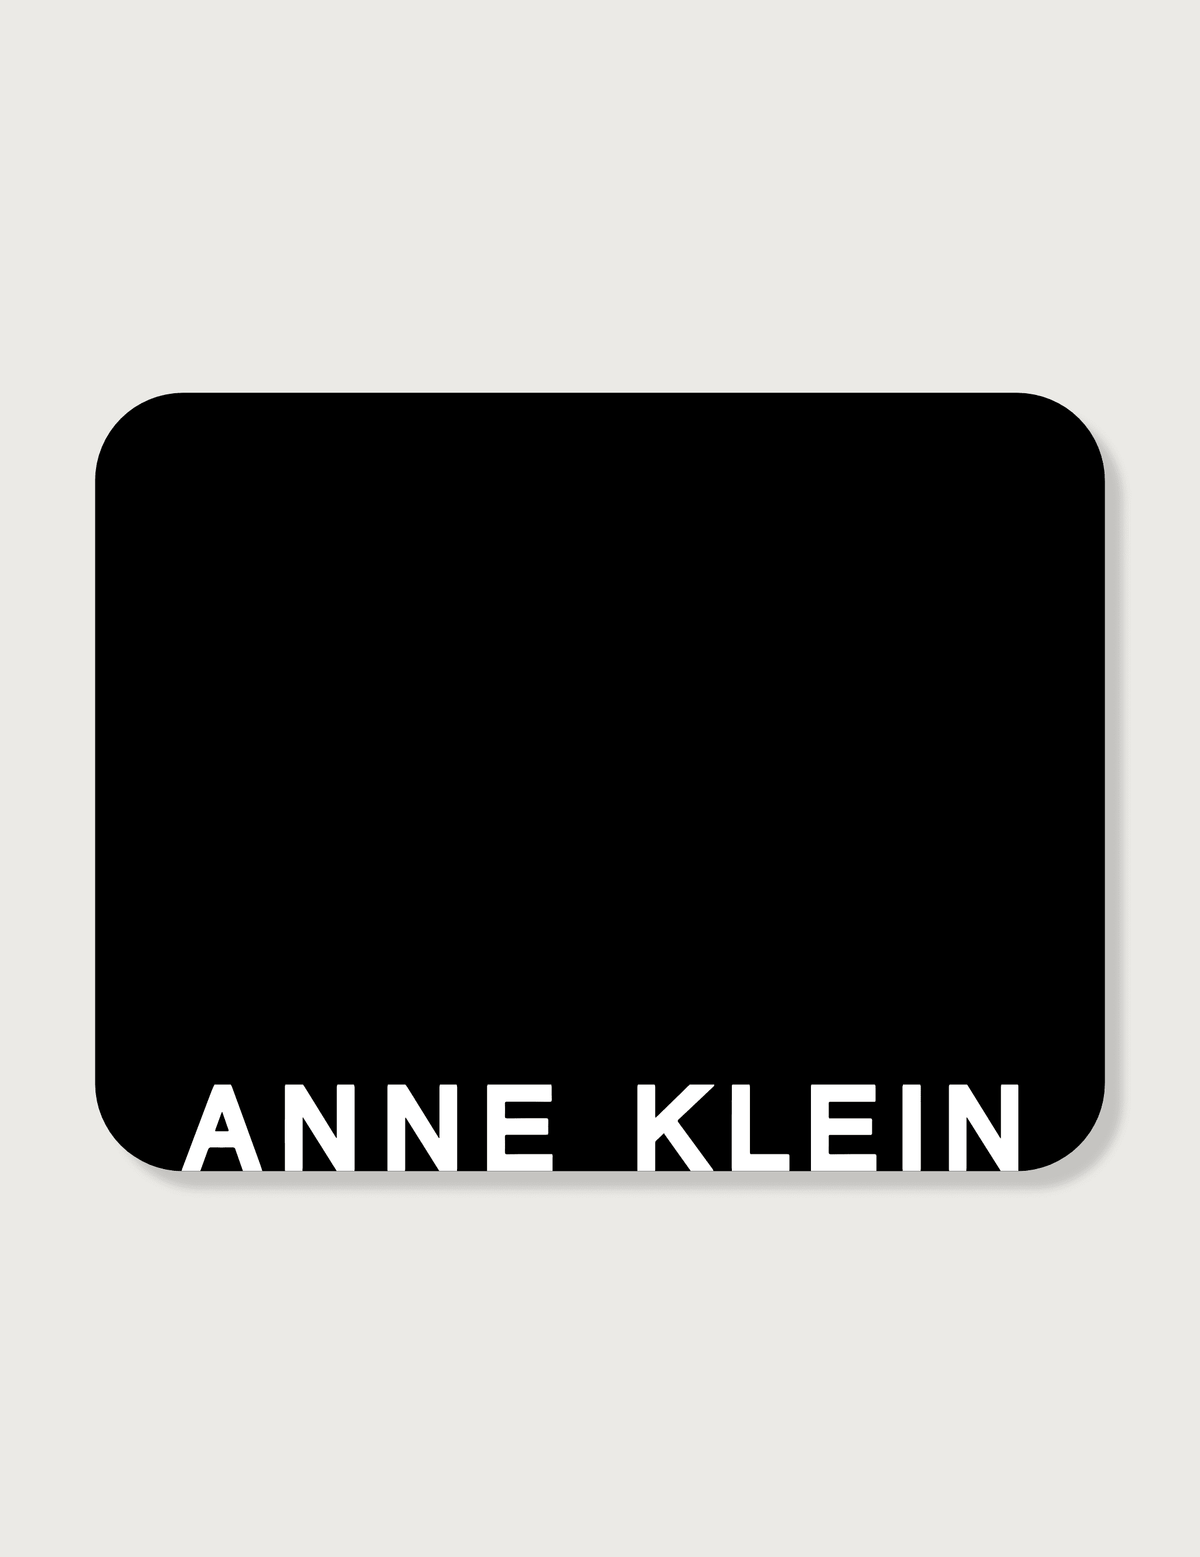 Anne Klein $10.00 Anne Klein E-Gift Card